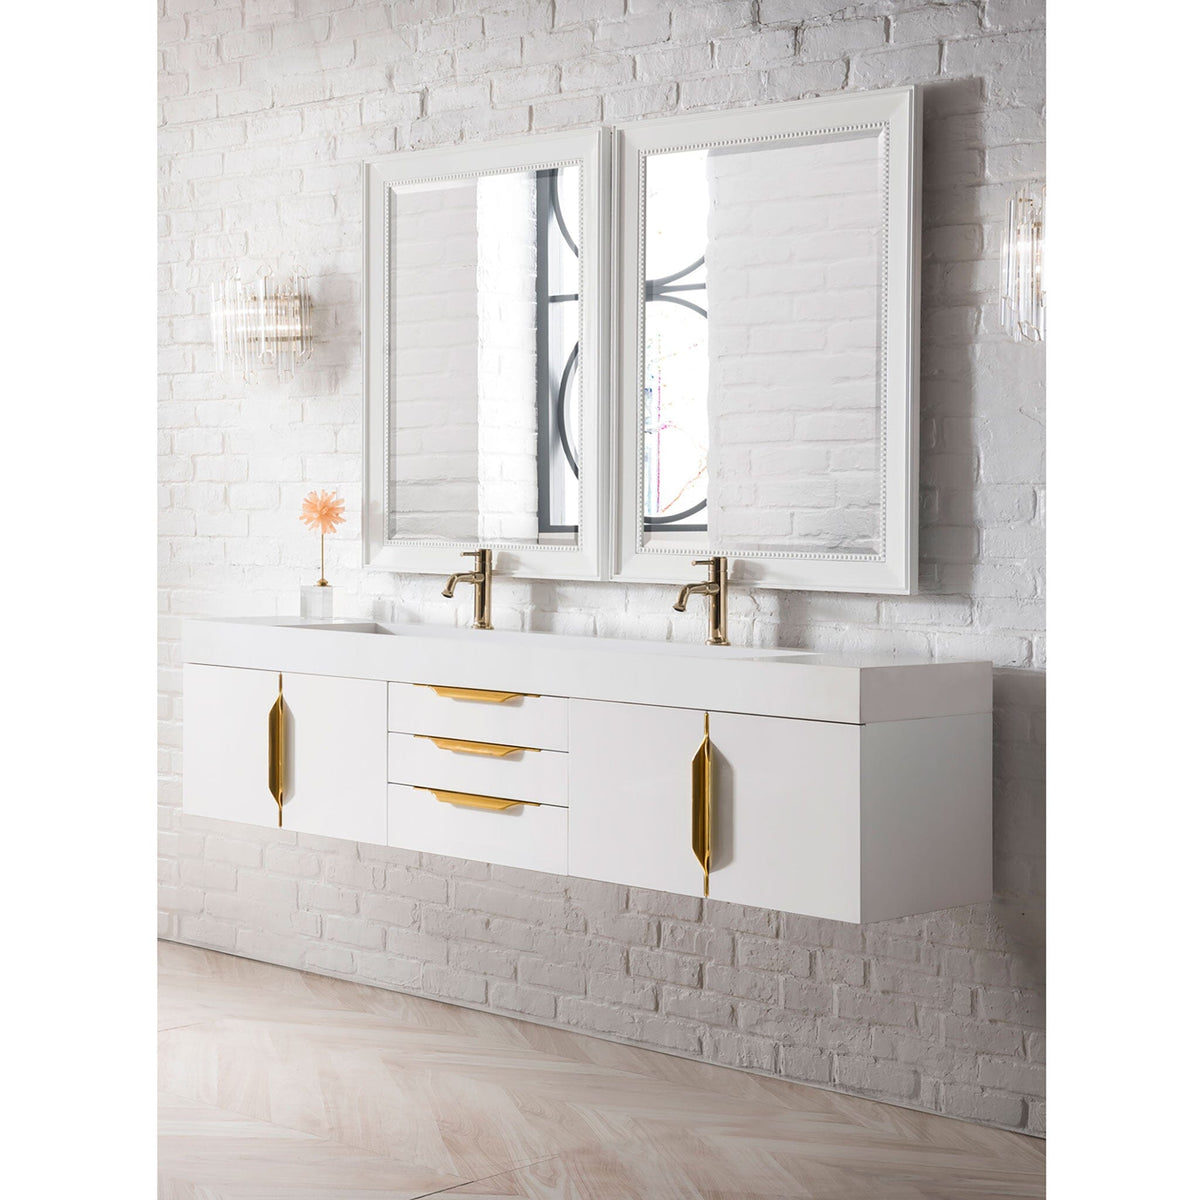 72" Mercer Island Double Bathroom Vanity, Glossy White w/ Radiant Gold